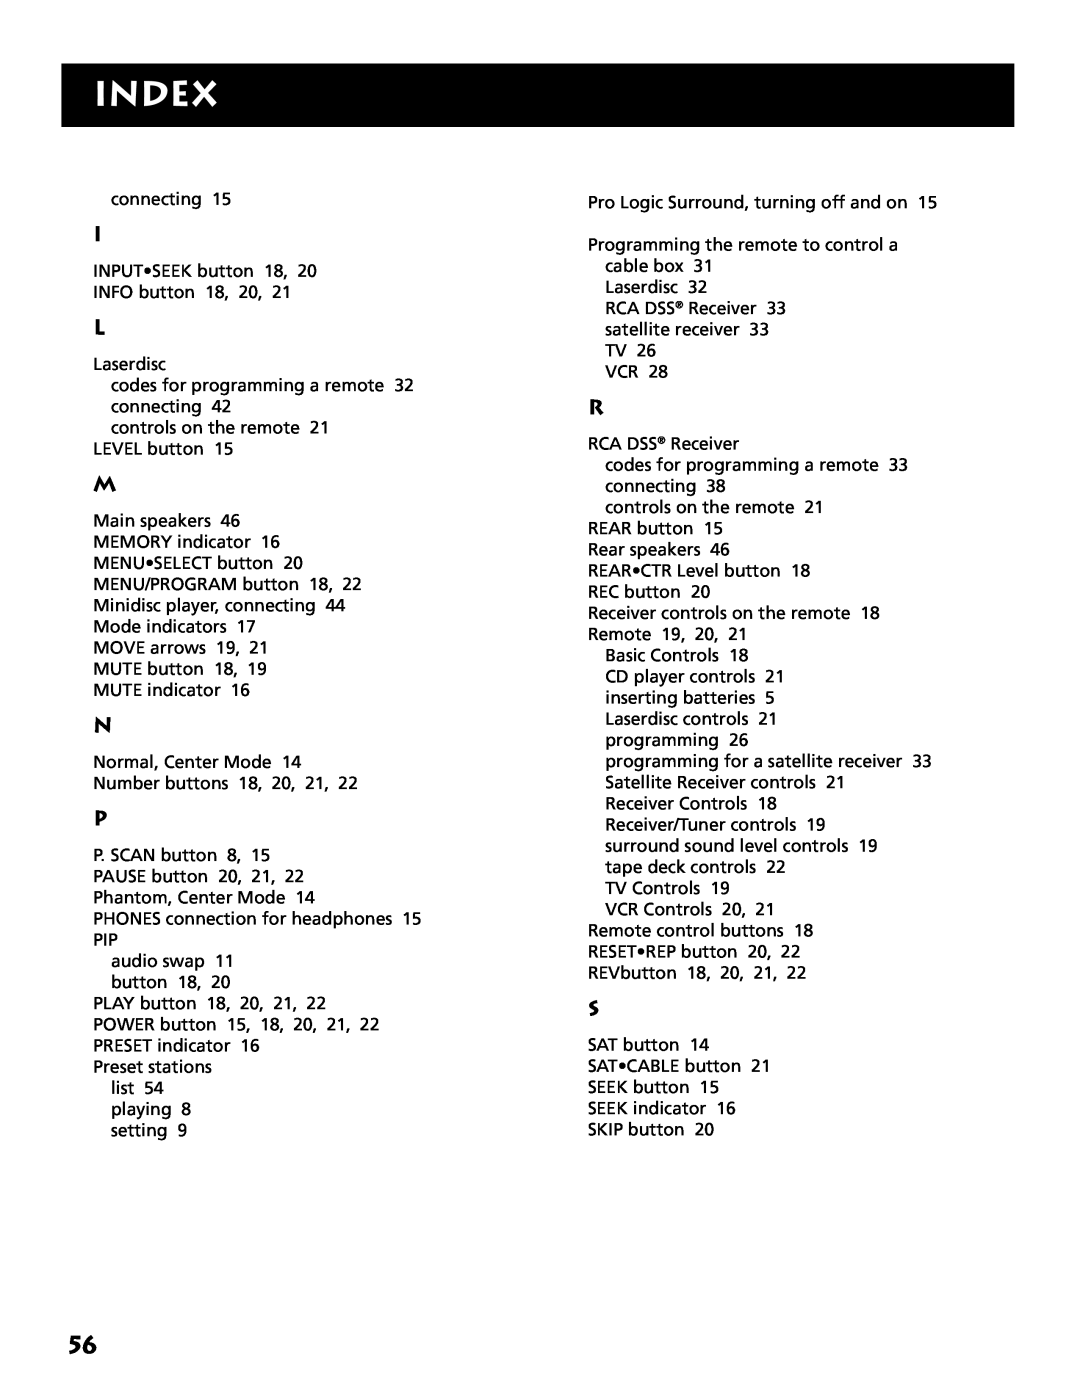 Electrohome RV-3798 manual Index 